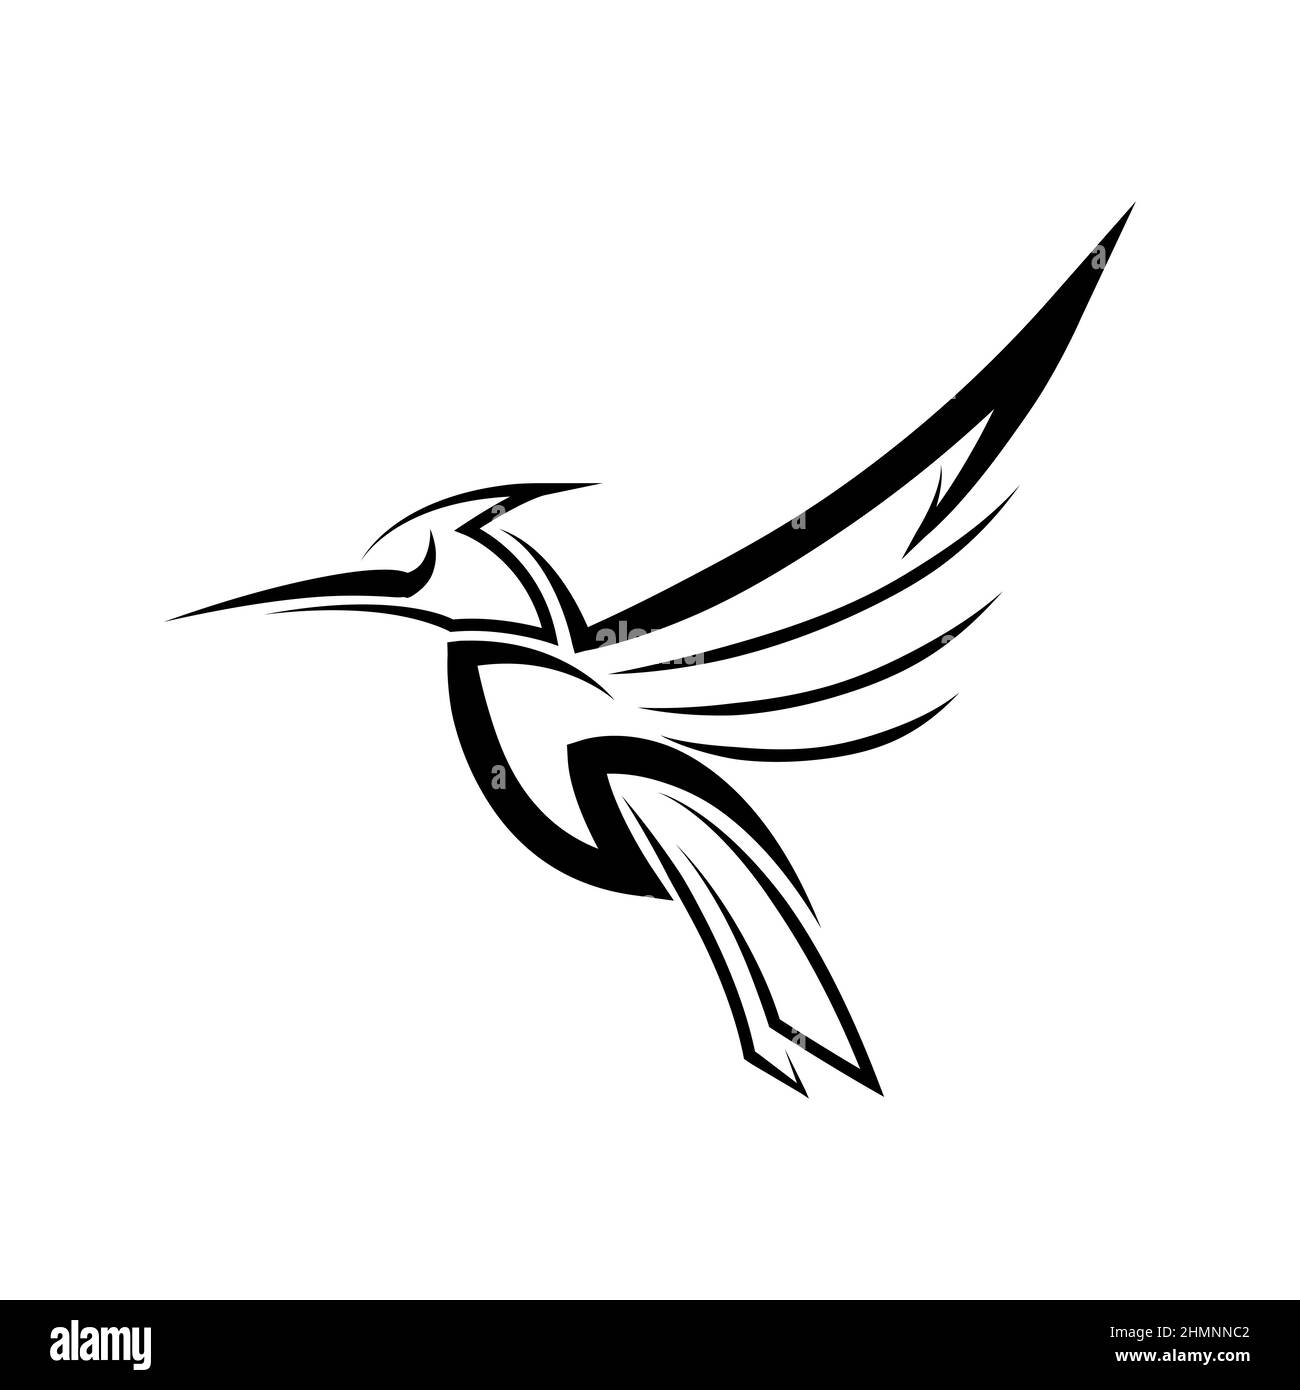 Hummingbird Tattoo Design Stock Vector Royalty Free 1051151129   Shutterstock